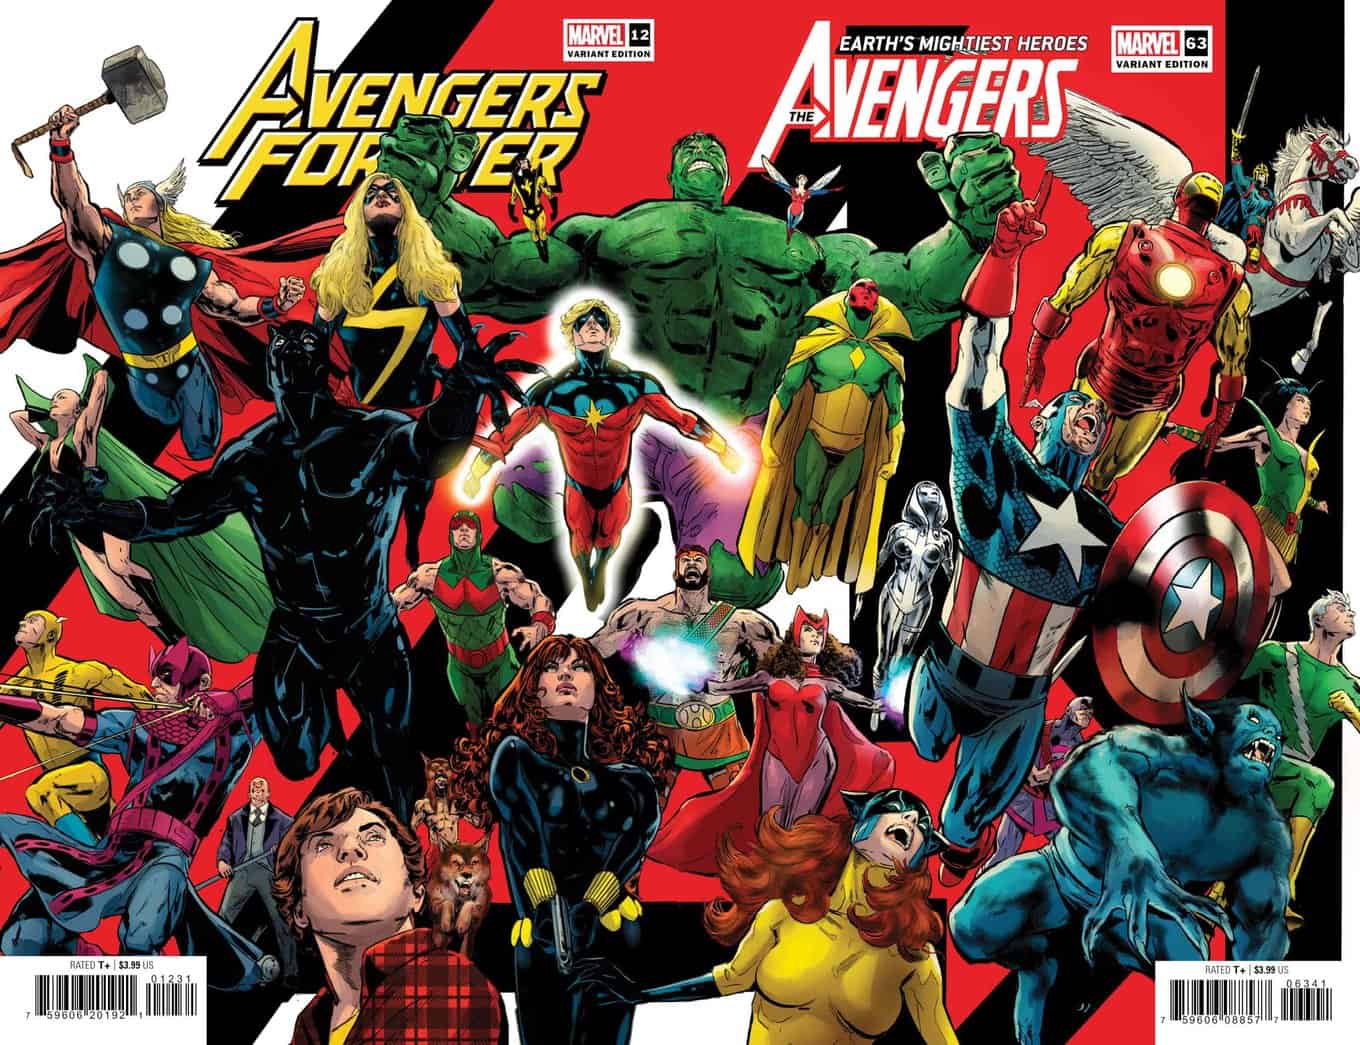 Avengers Forever #12 spoilers 0-2- connecting variant cover Avengers #63